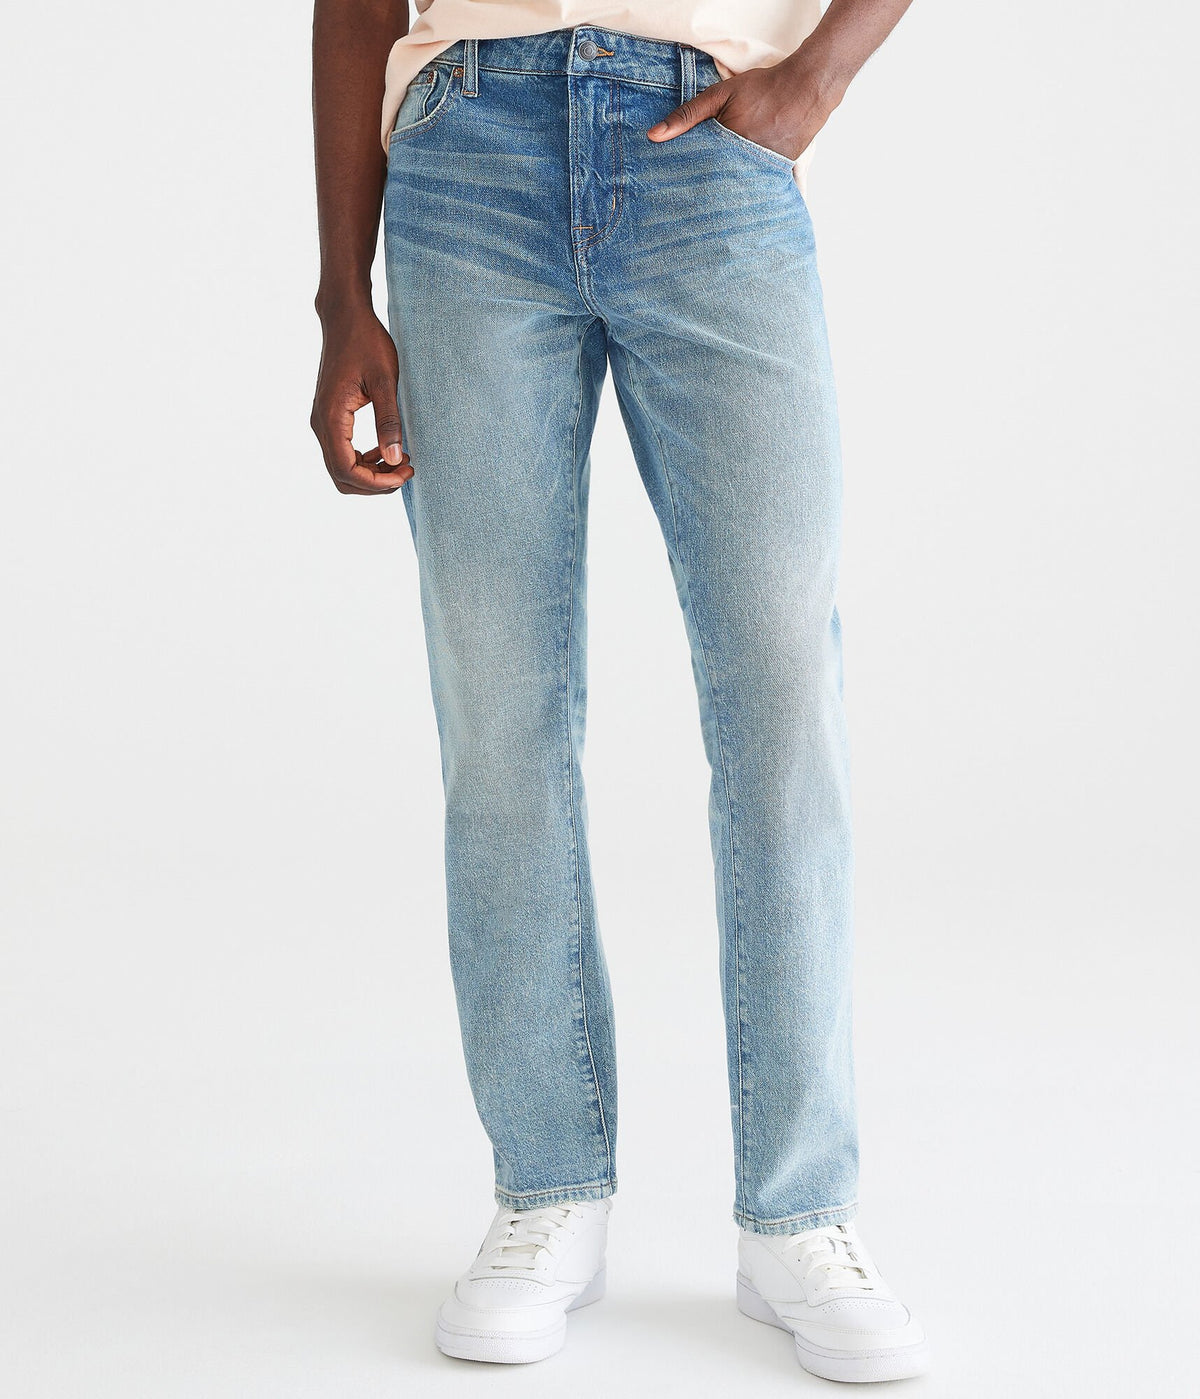 Aeropostale Mens' Athletic Slim Jean - Washed Denim - Size 38X32 - Cotton - Teen Fashion & Clothing Medium Wash